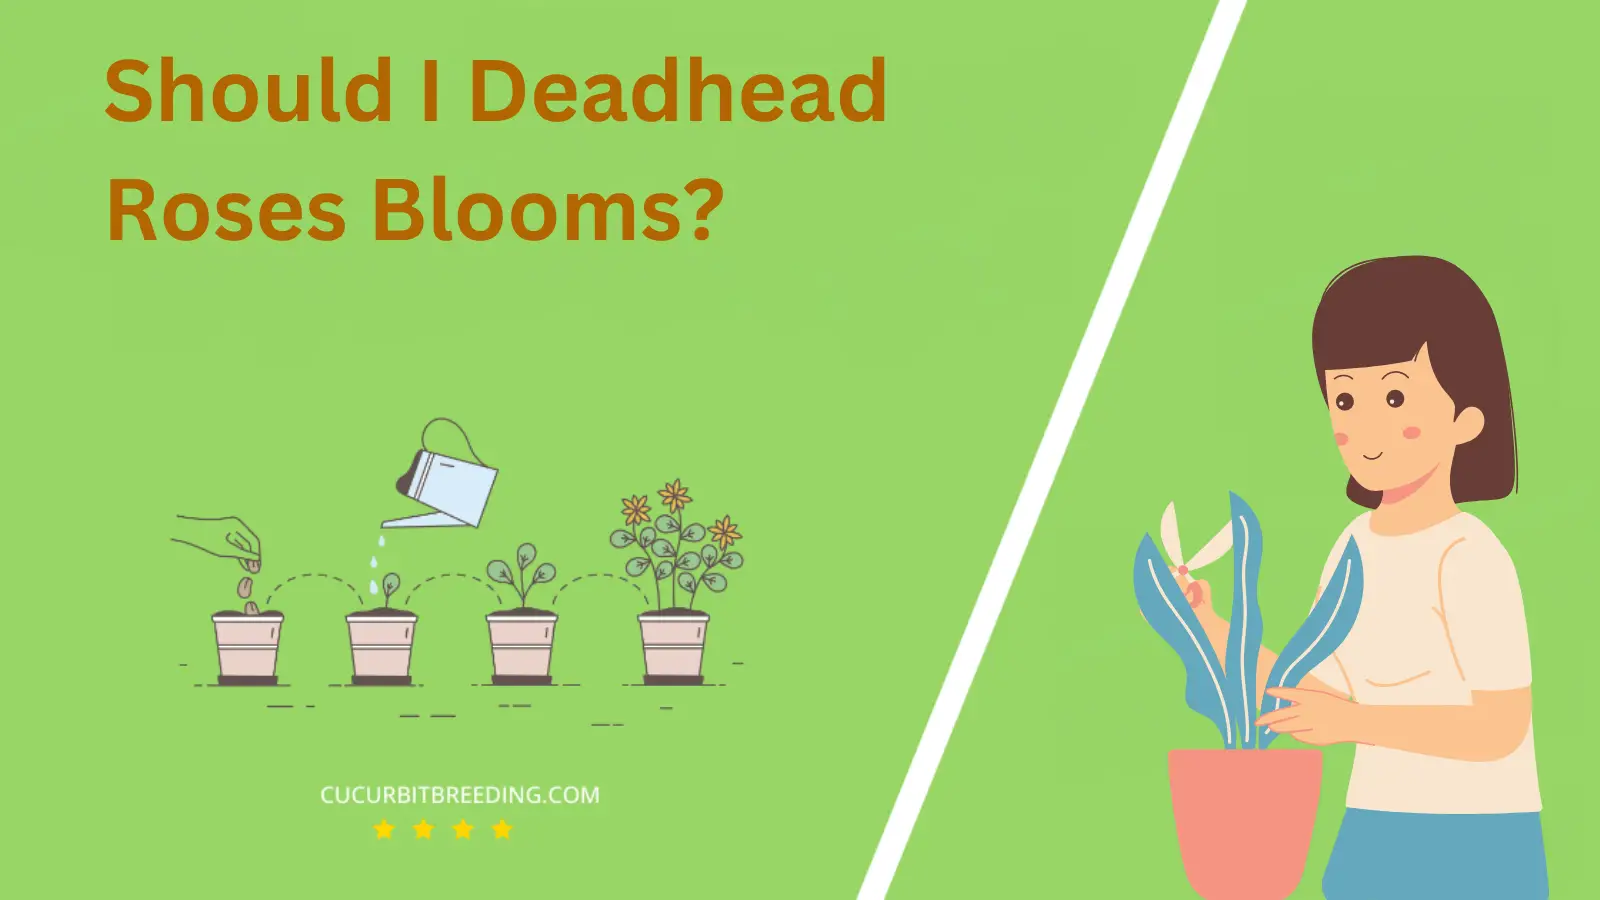 Should I Deadhead Roses Blooms?